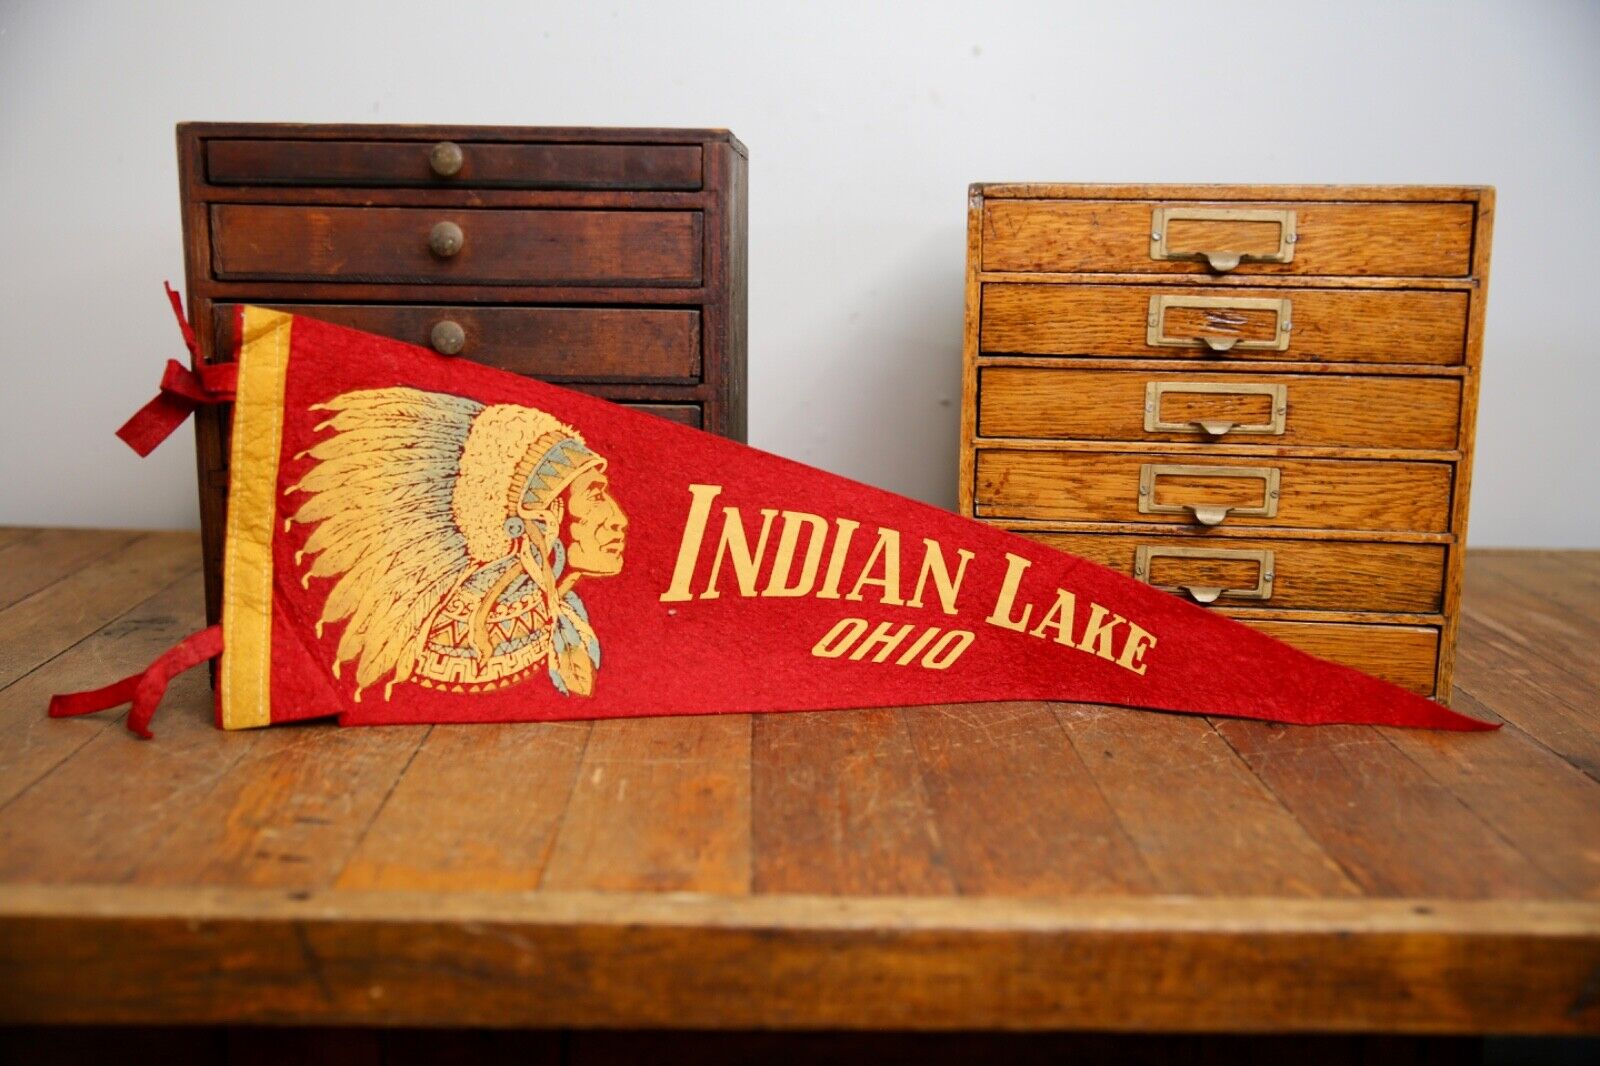 Vintage Indian Lake Ohio felt pennant school banner sign flag red headdress old